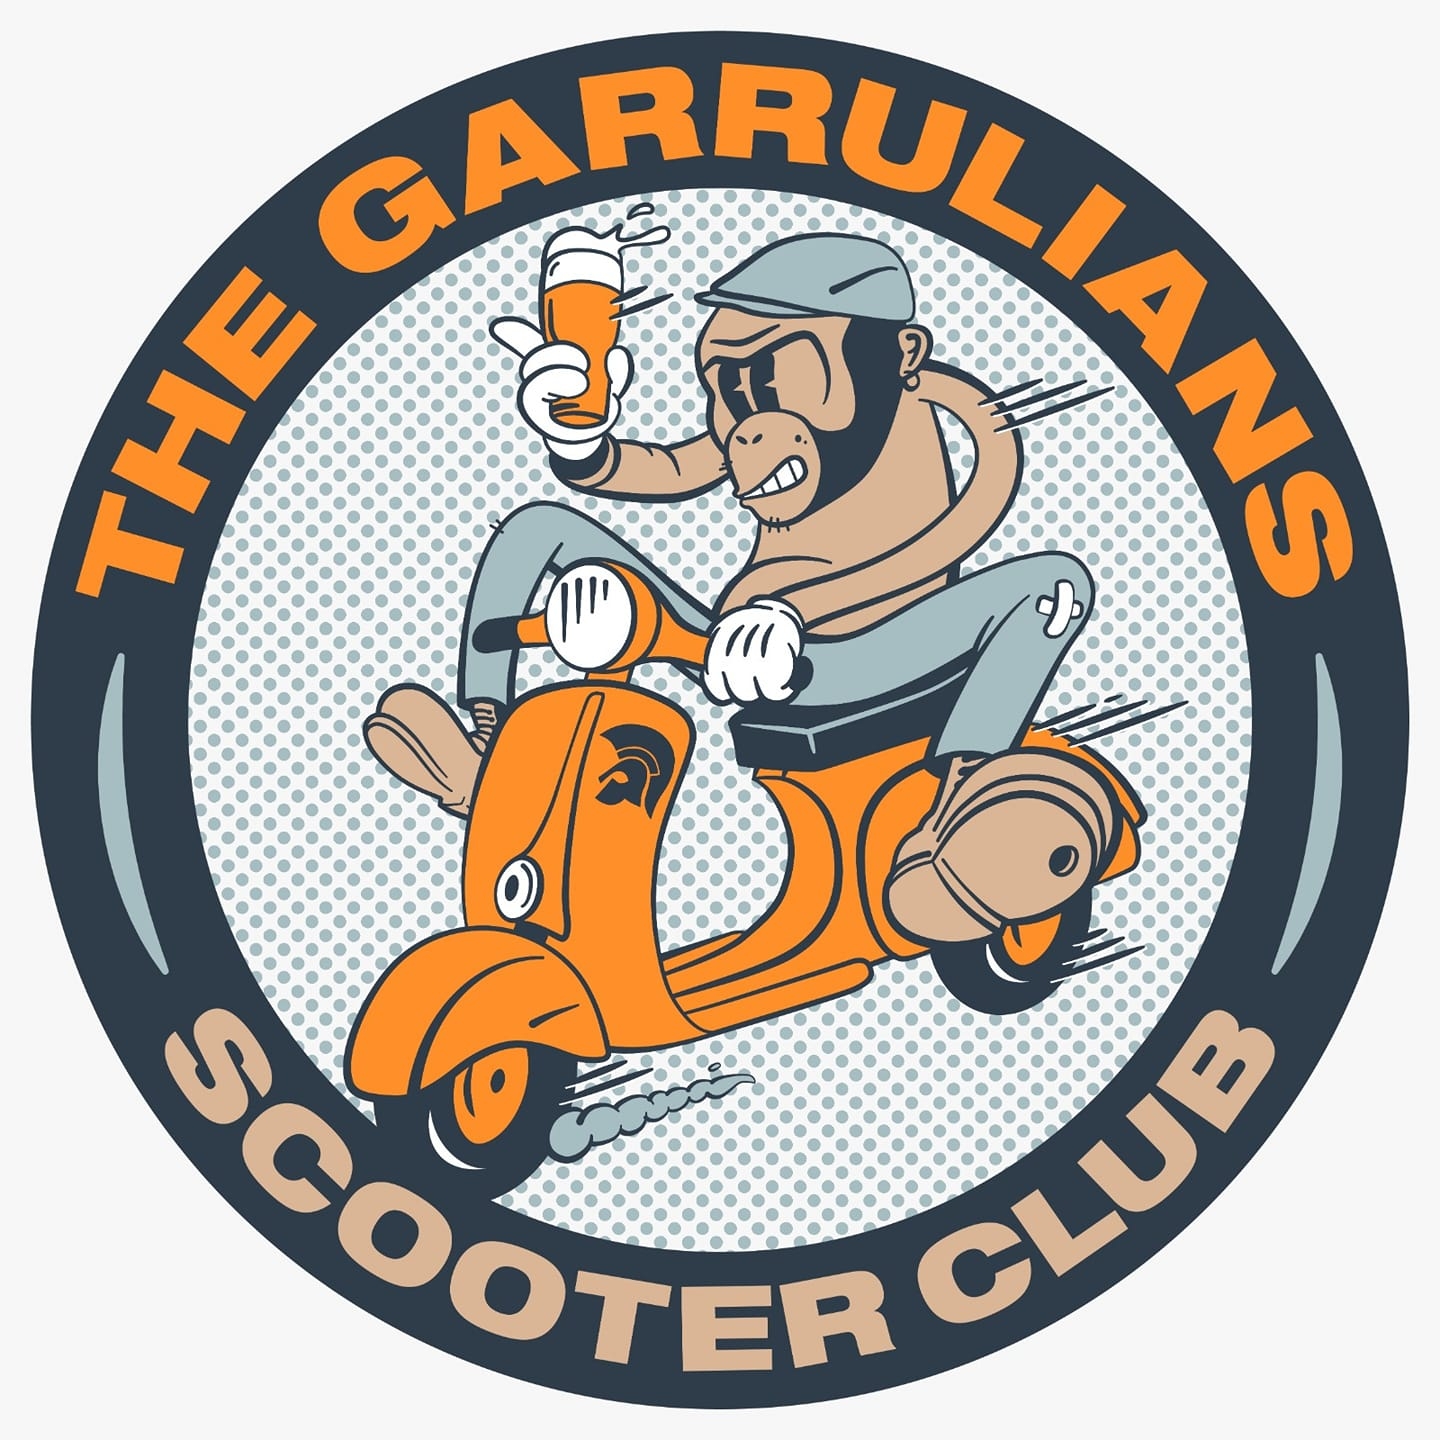 The Garrulians Scooter Club